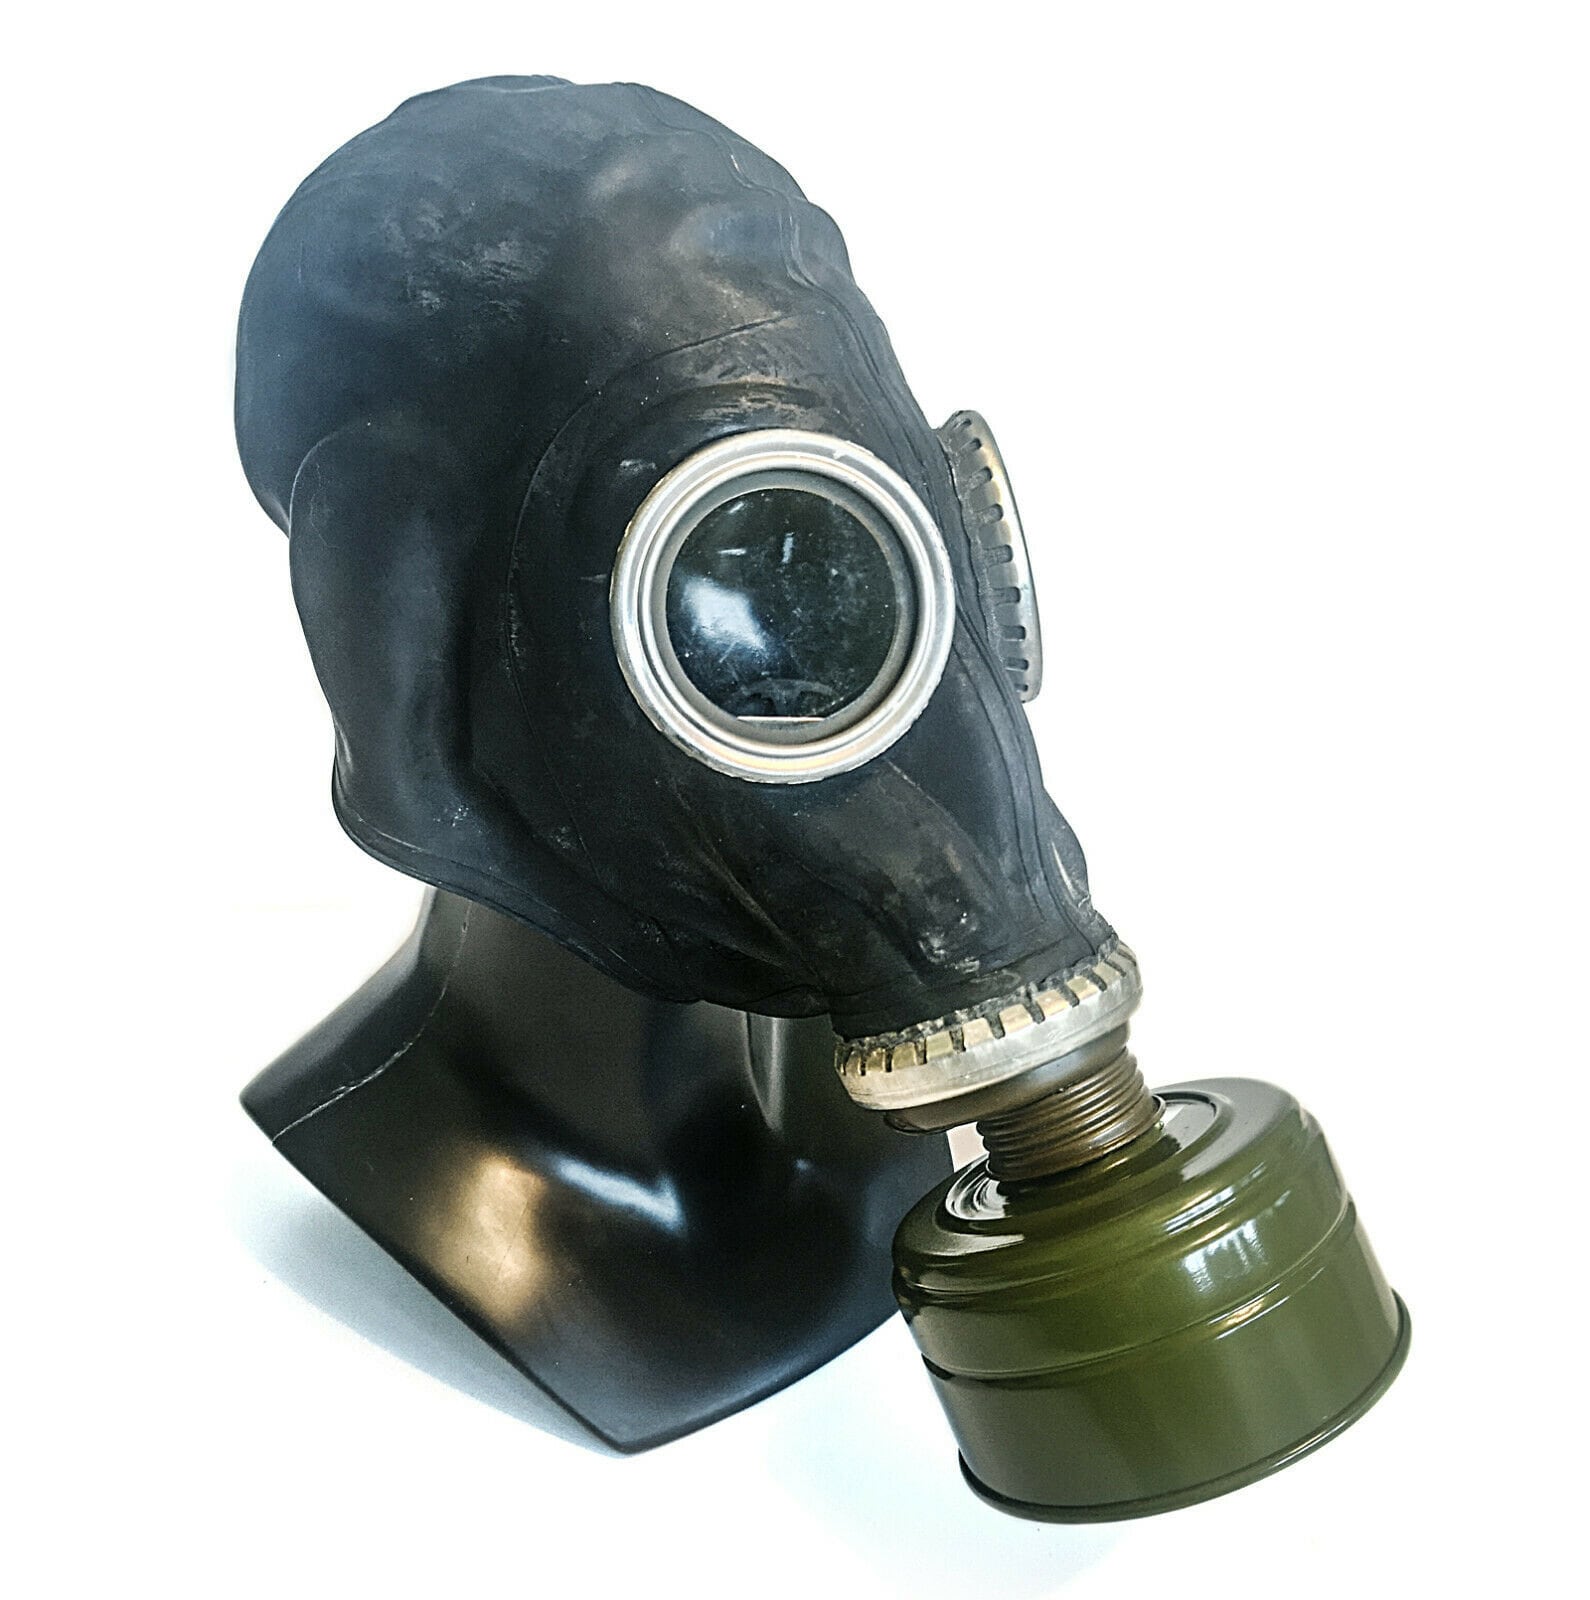 gp5 gas mask